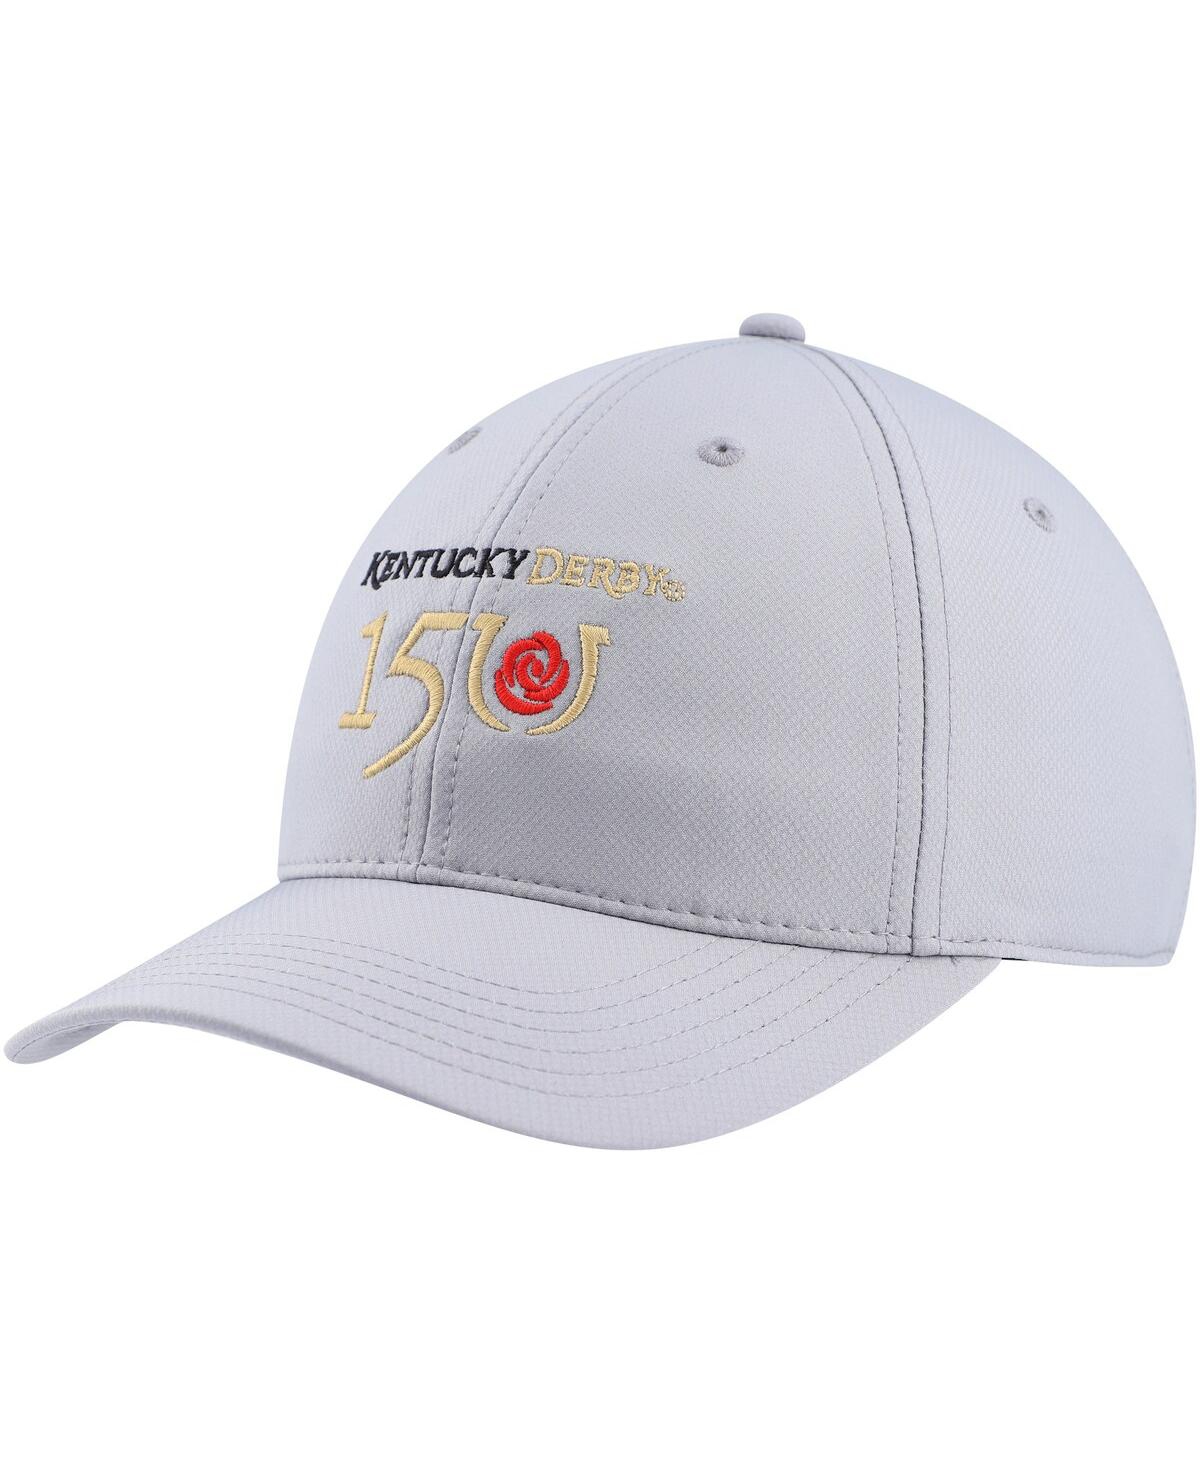 Men's Ahead Gray Kentucky Derby 150 Frio Adjustable Hat - Gray